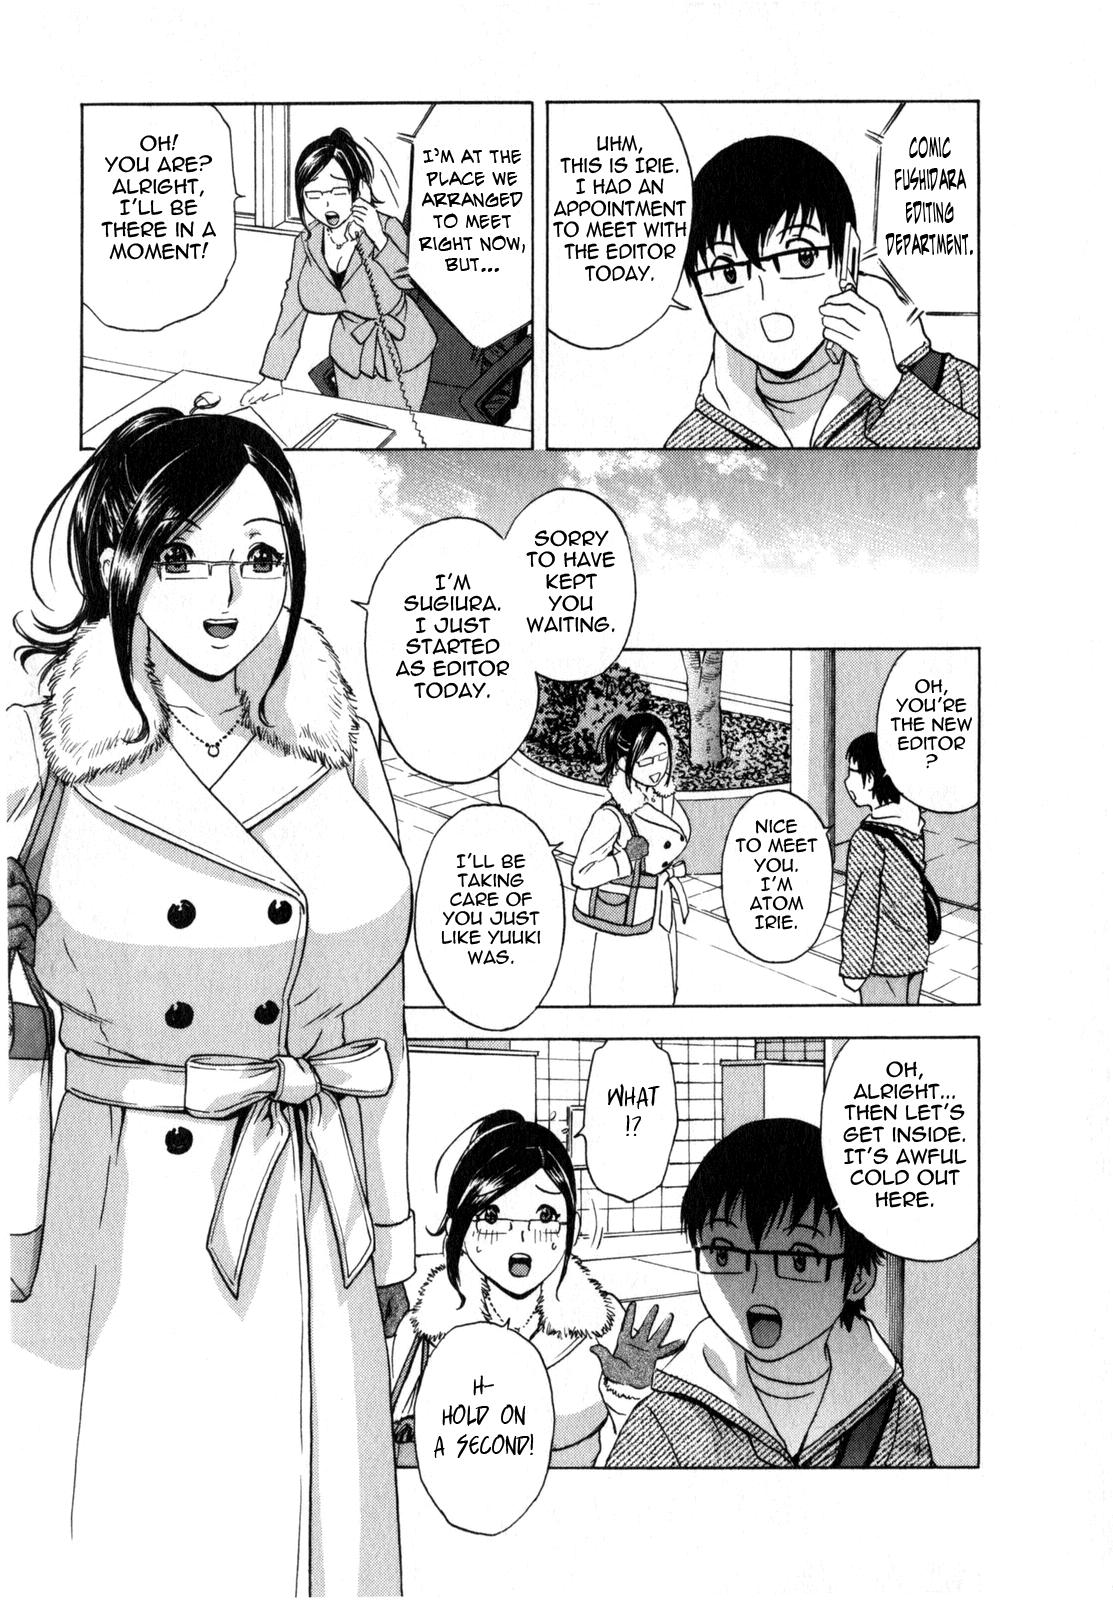 Life with Married Women Just Like a Manga 2 - Ch. 1 14